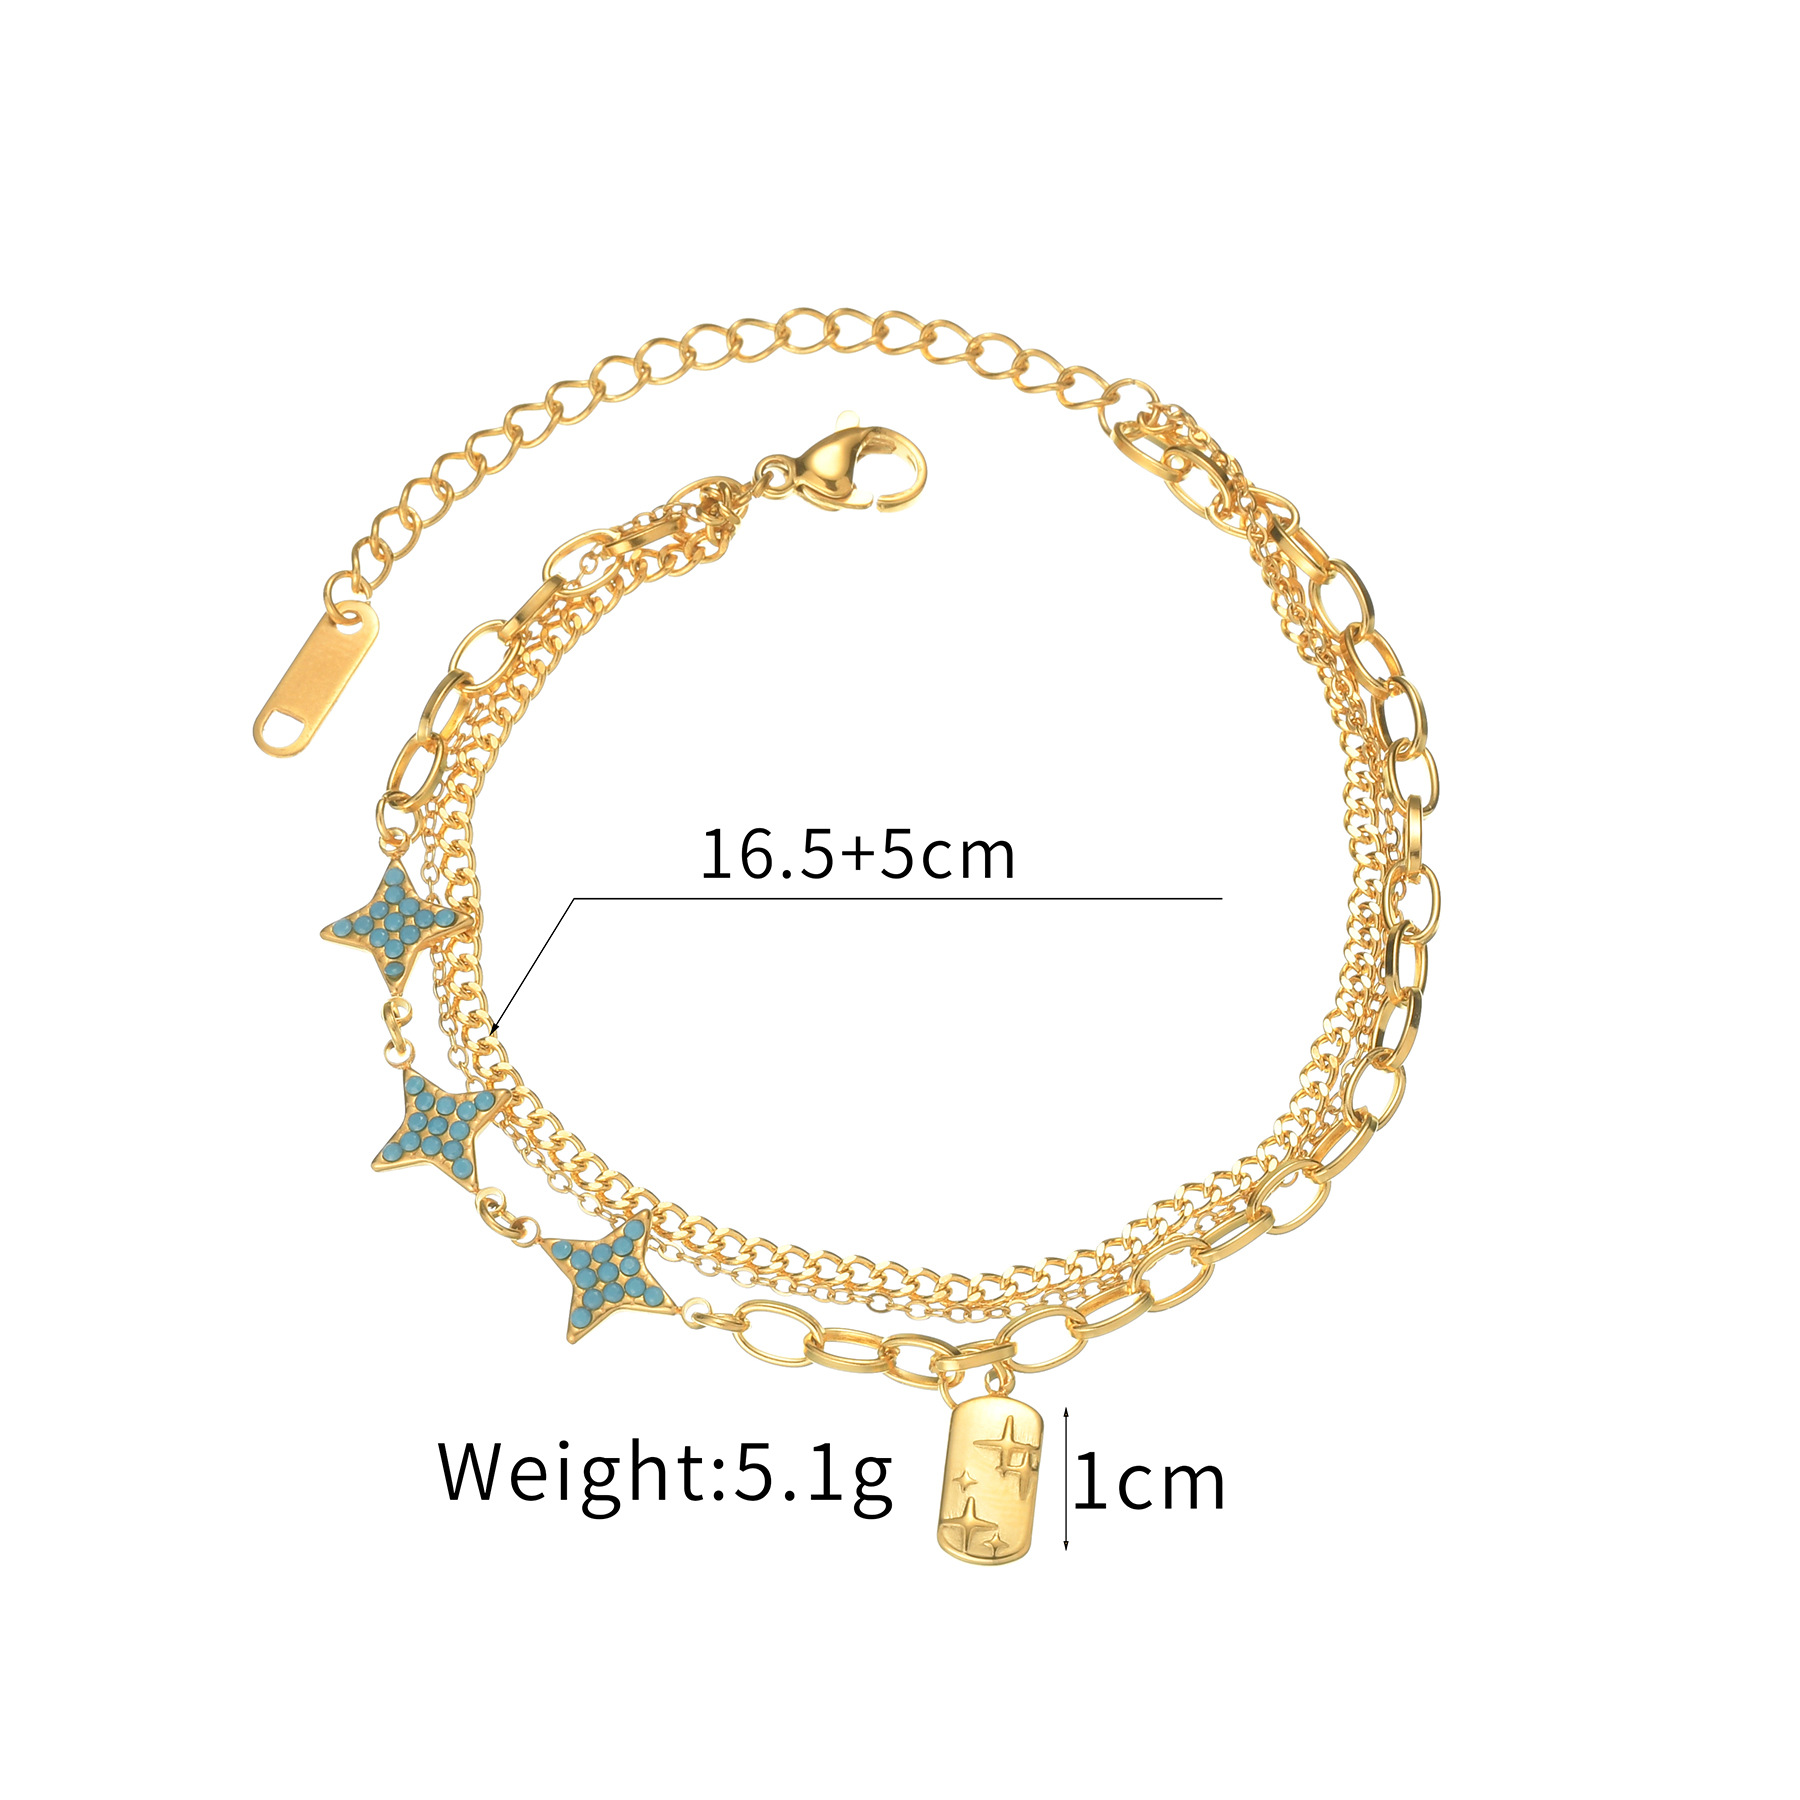 1:Blue star gold bracelet